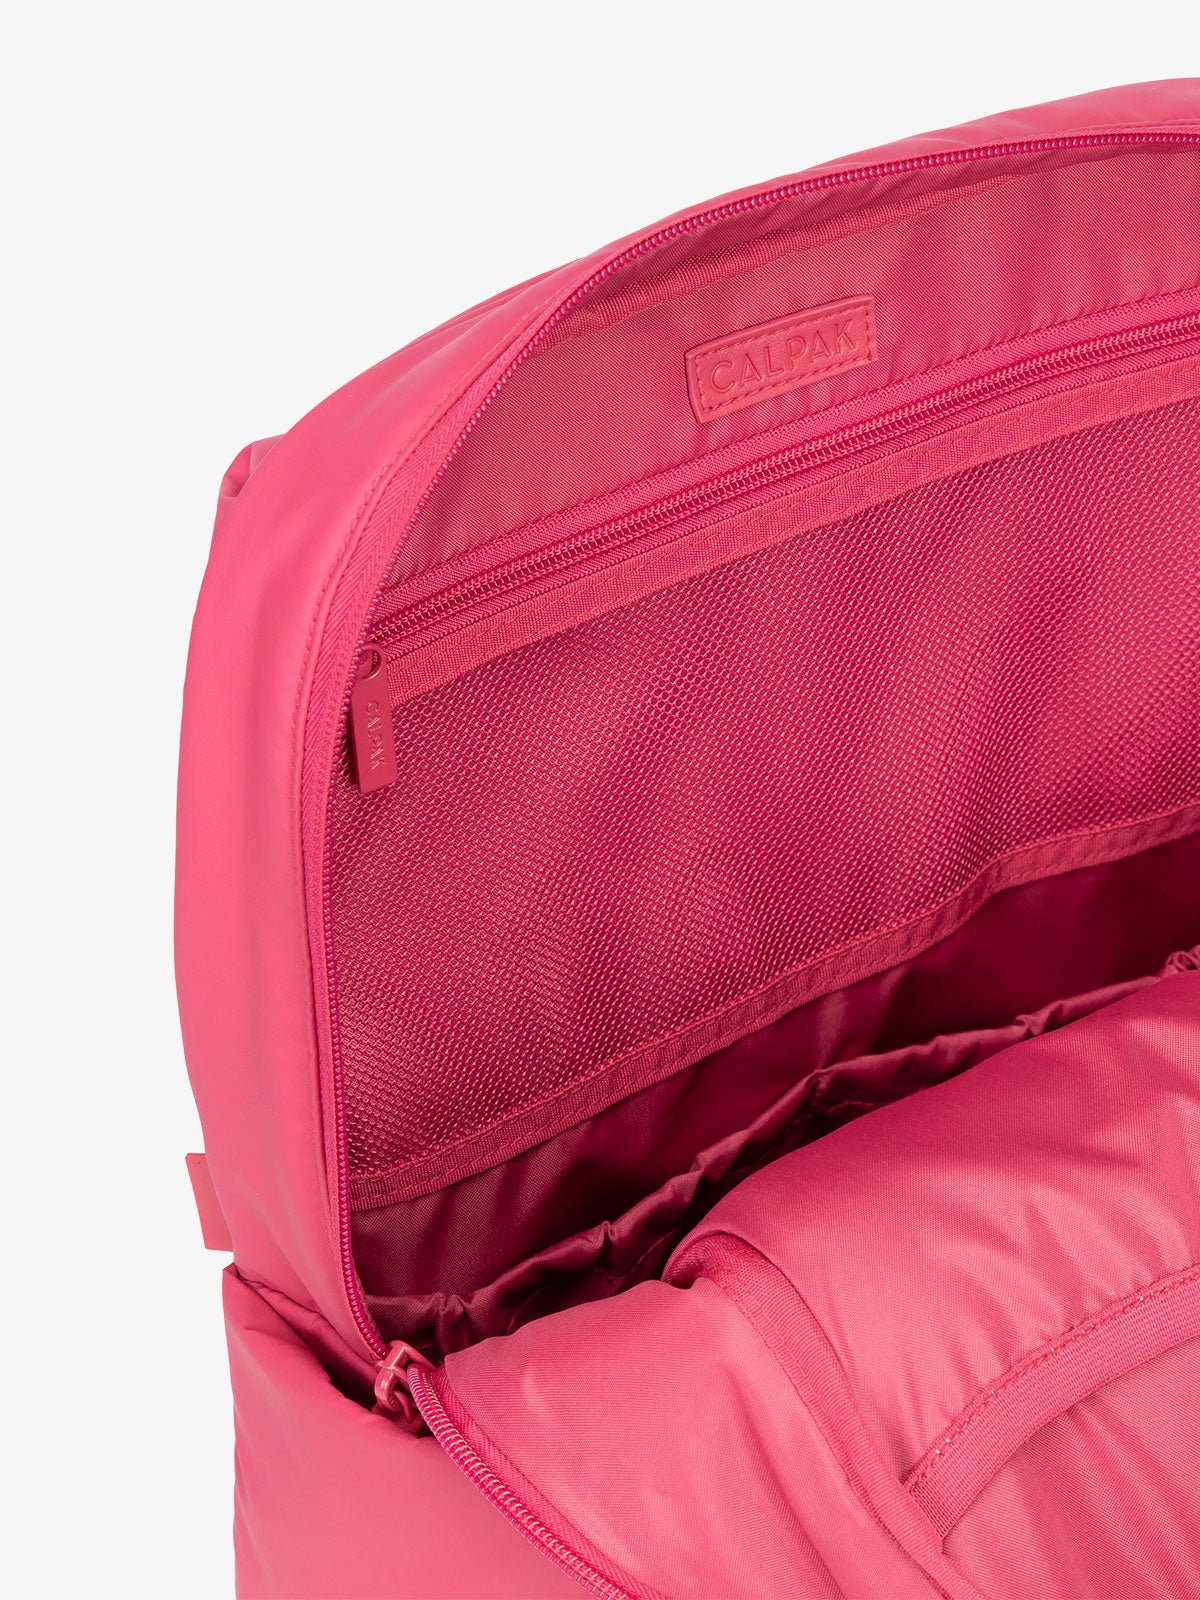 CALPAK Luka Laptop puffy Backpack for work with mesh pocket interior in dragonfruit